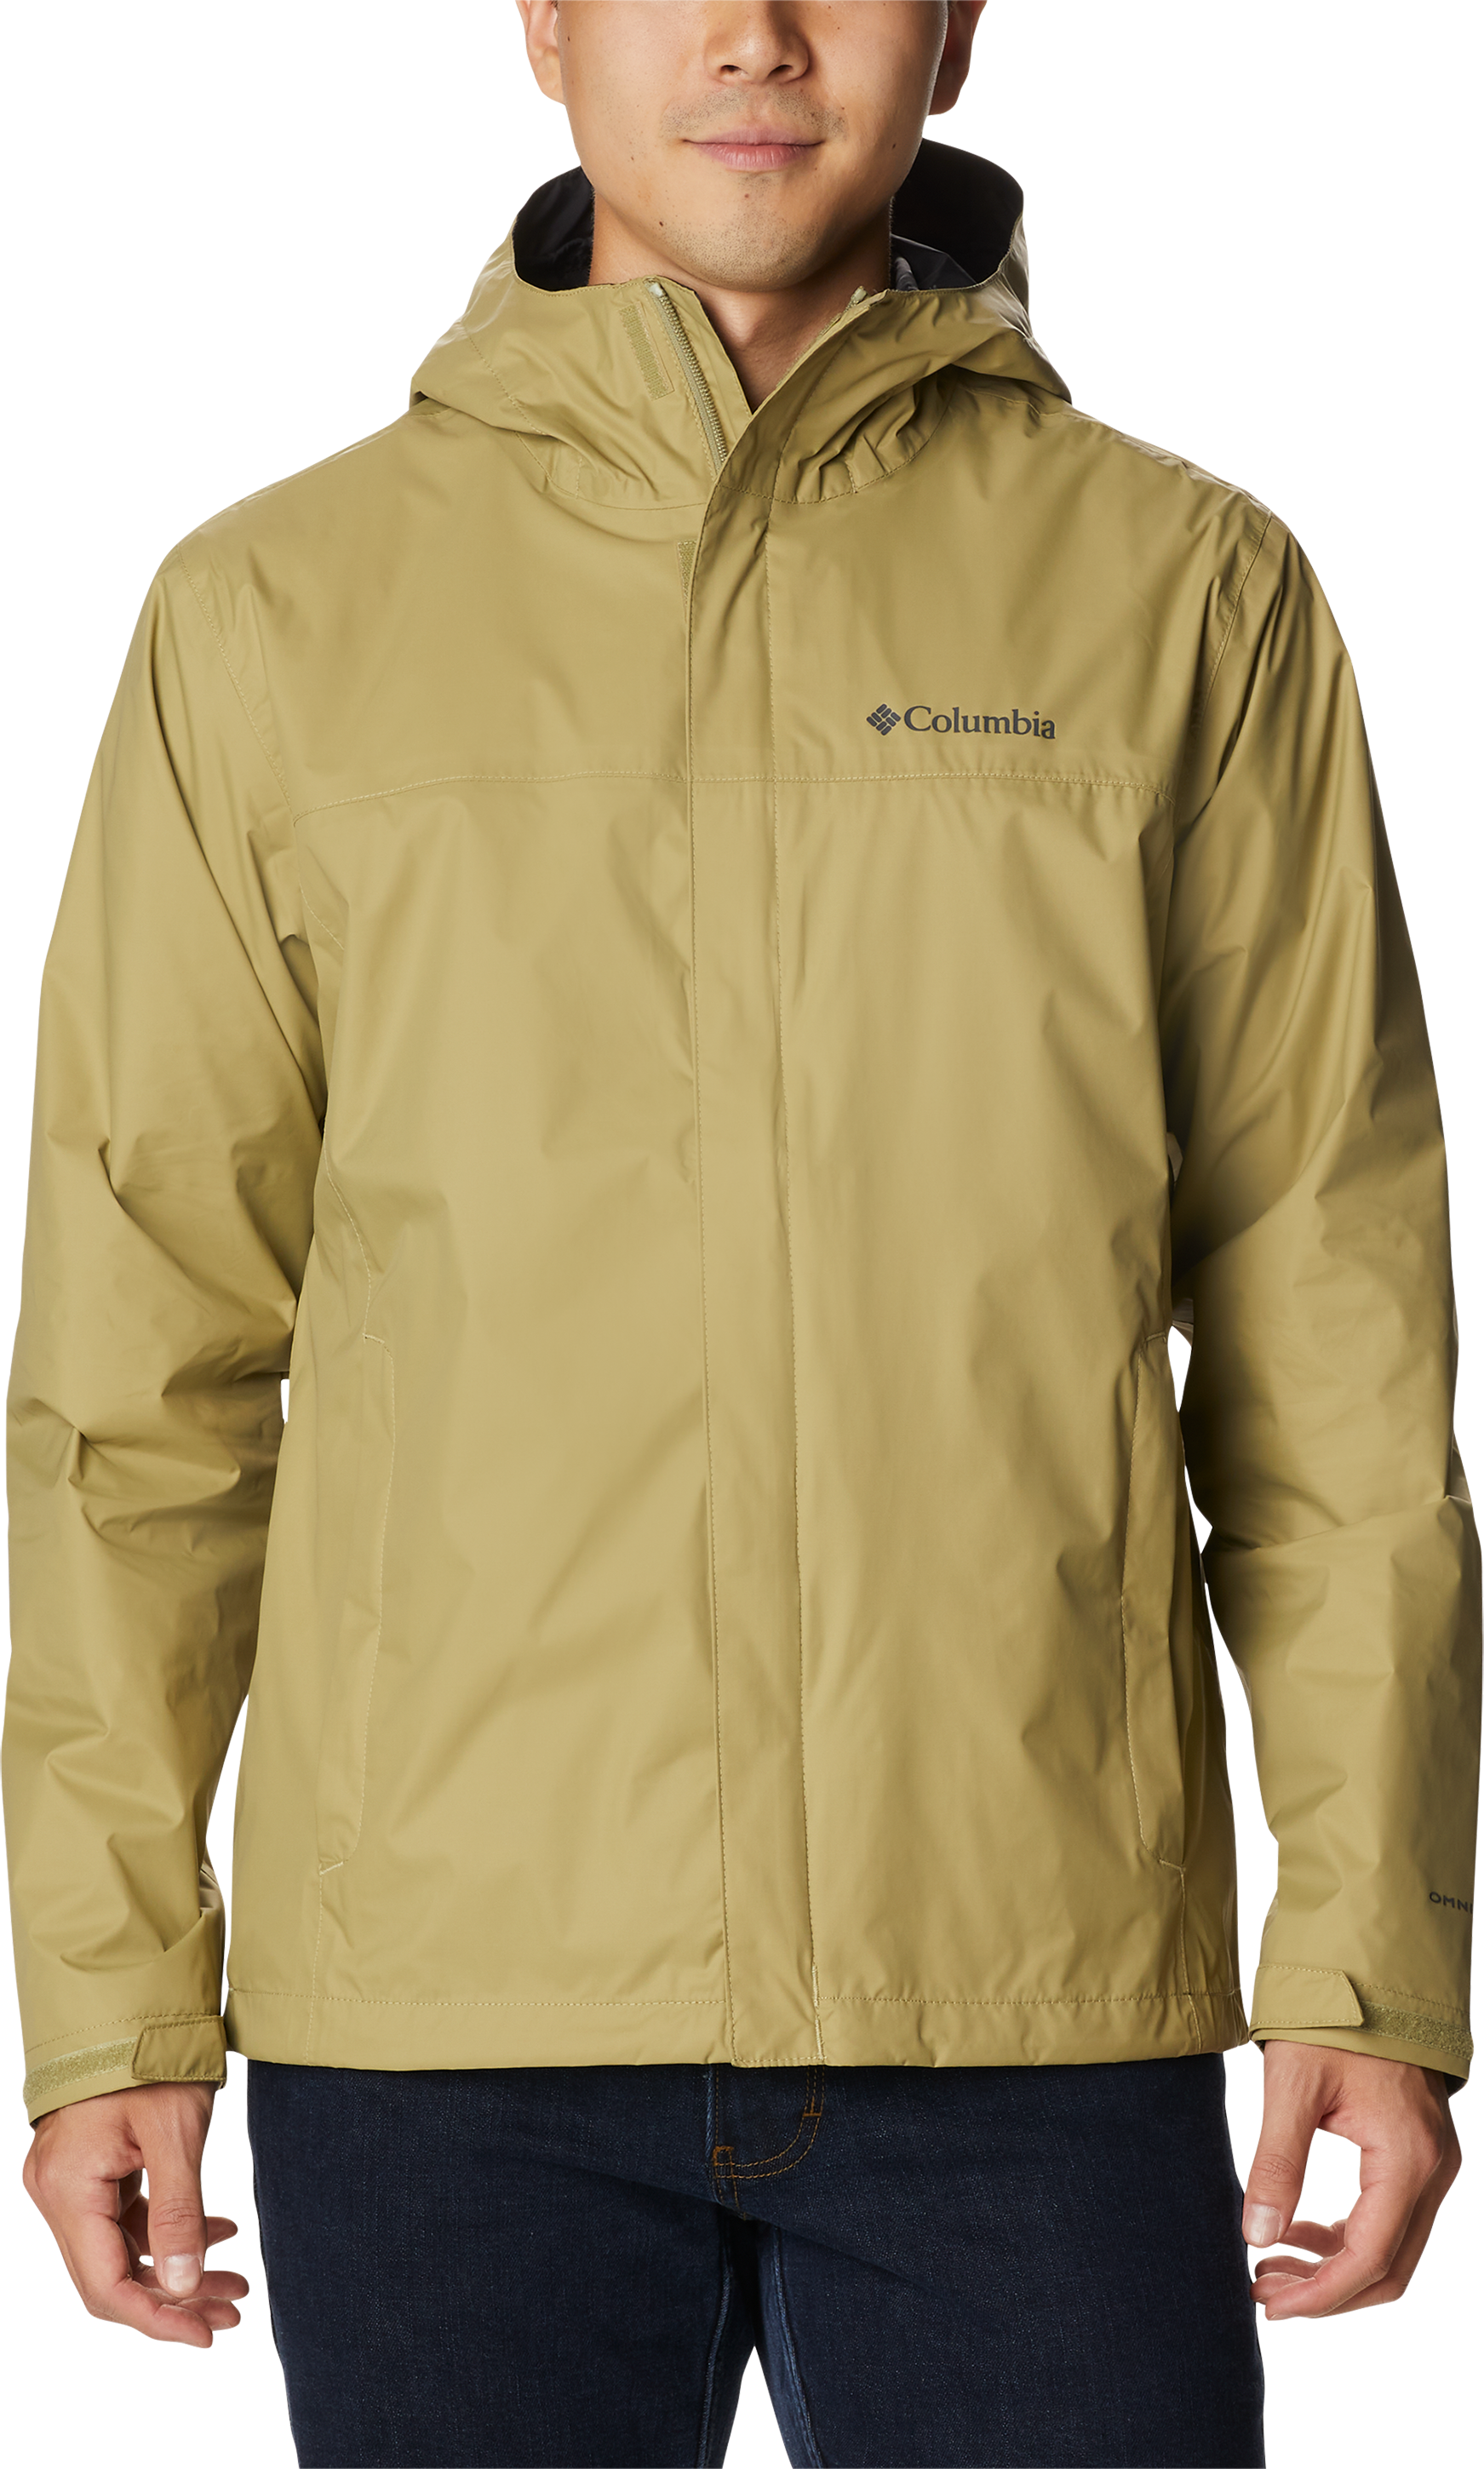 Columbia Watertight II Jacket for Men - Savory Green - S